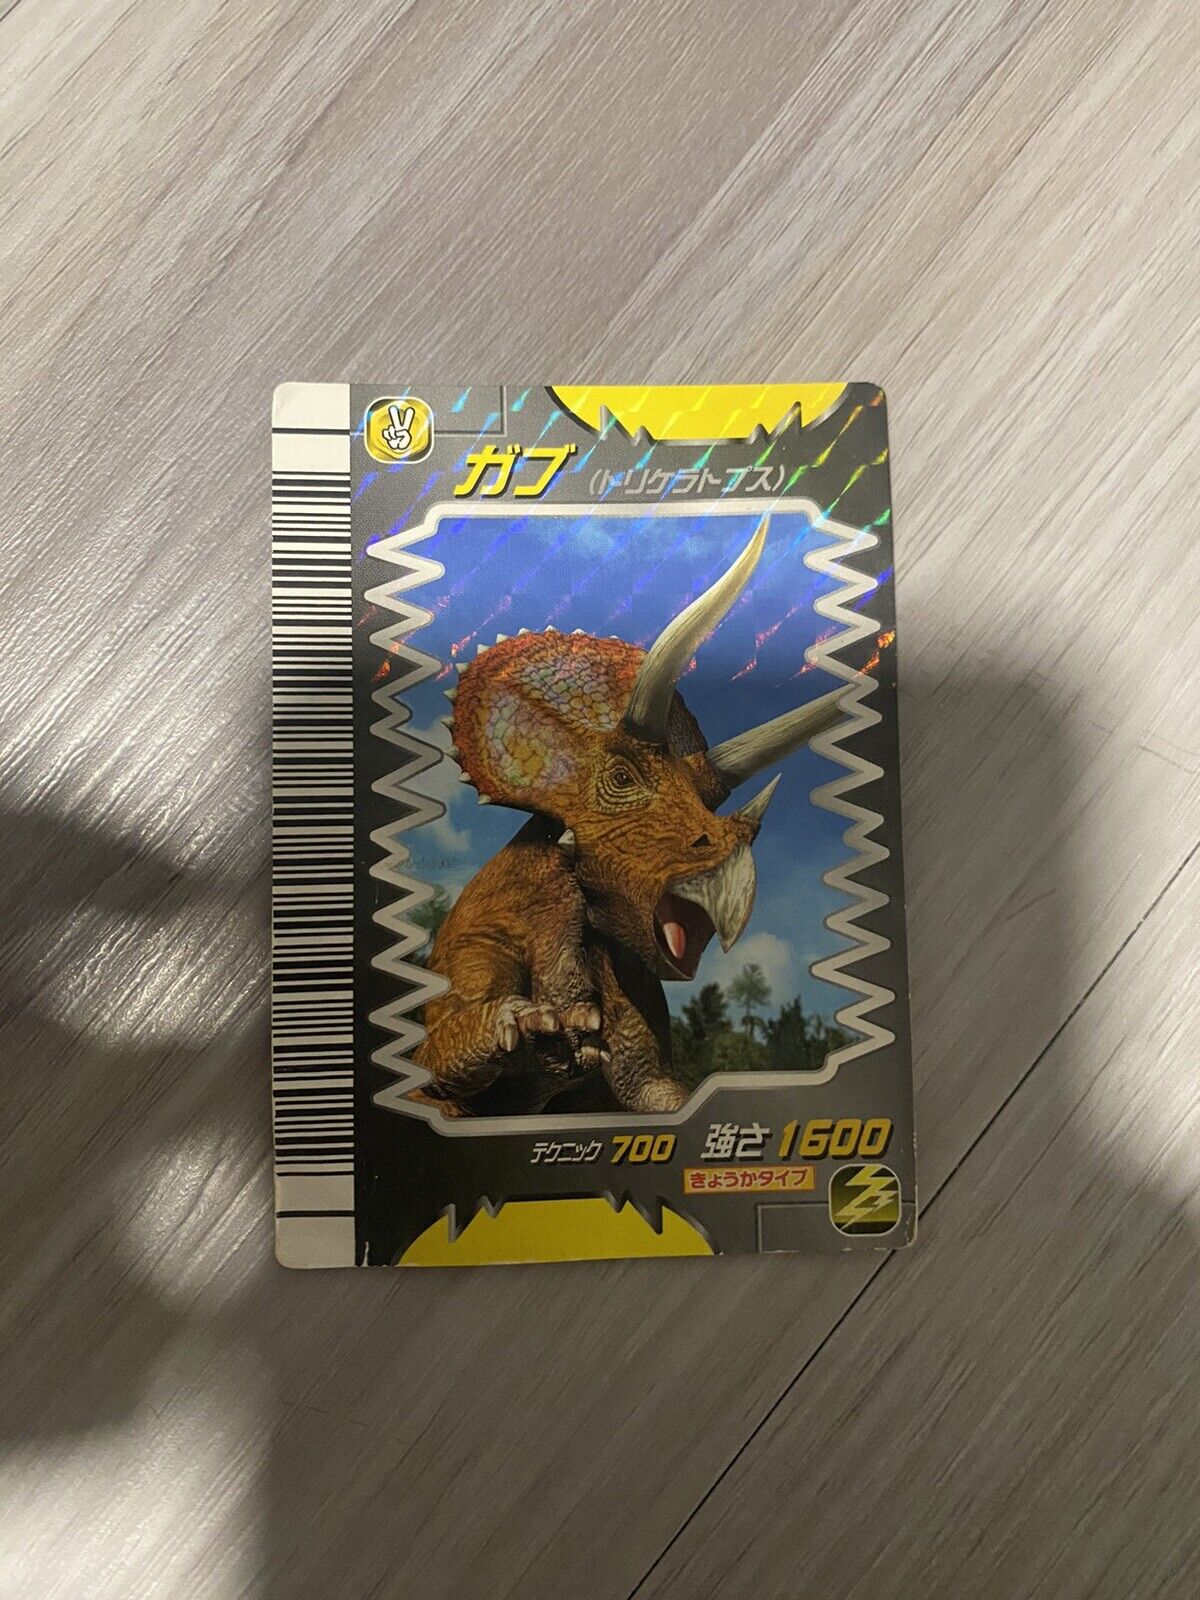 Dinosaur King Arcade Japanese McDonald’s Exclusive Chomp Card